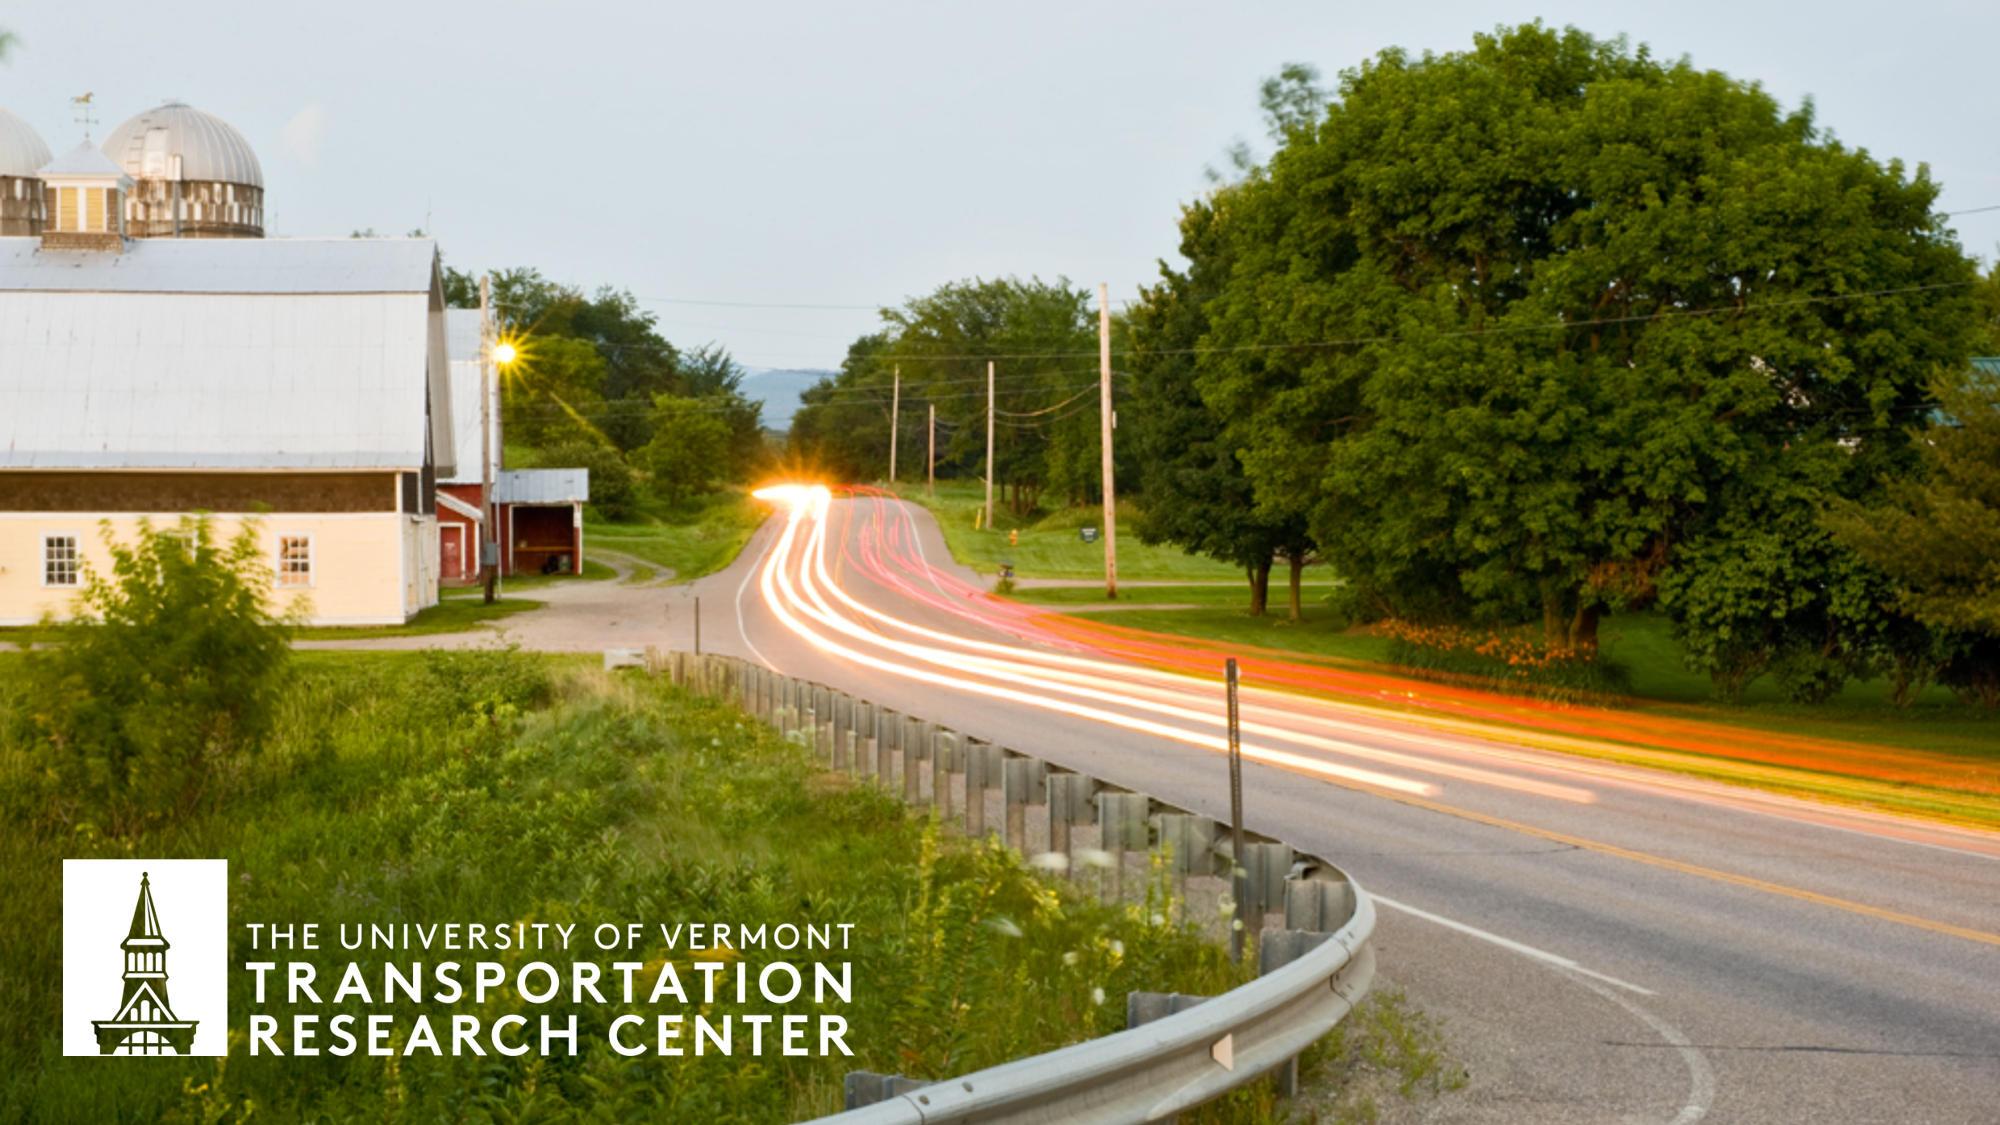 University of Vermont Transportation Research Center